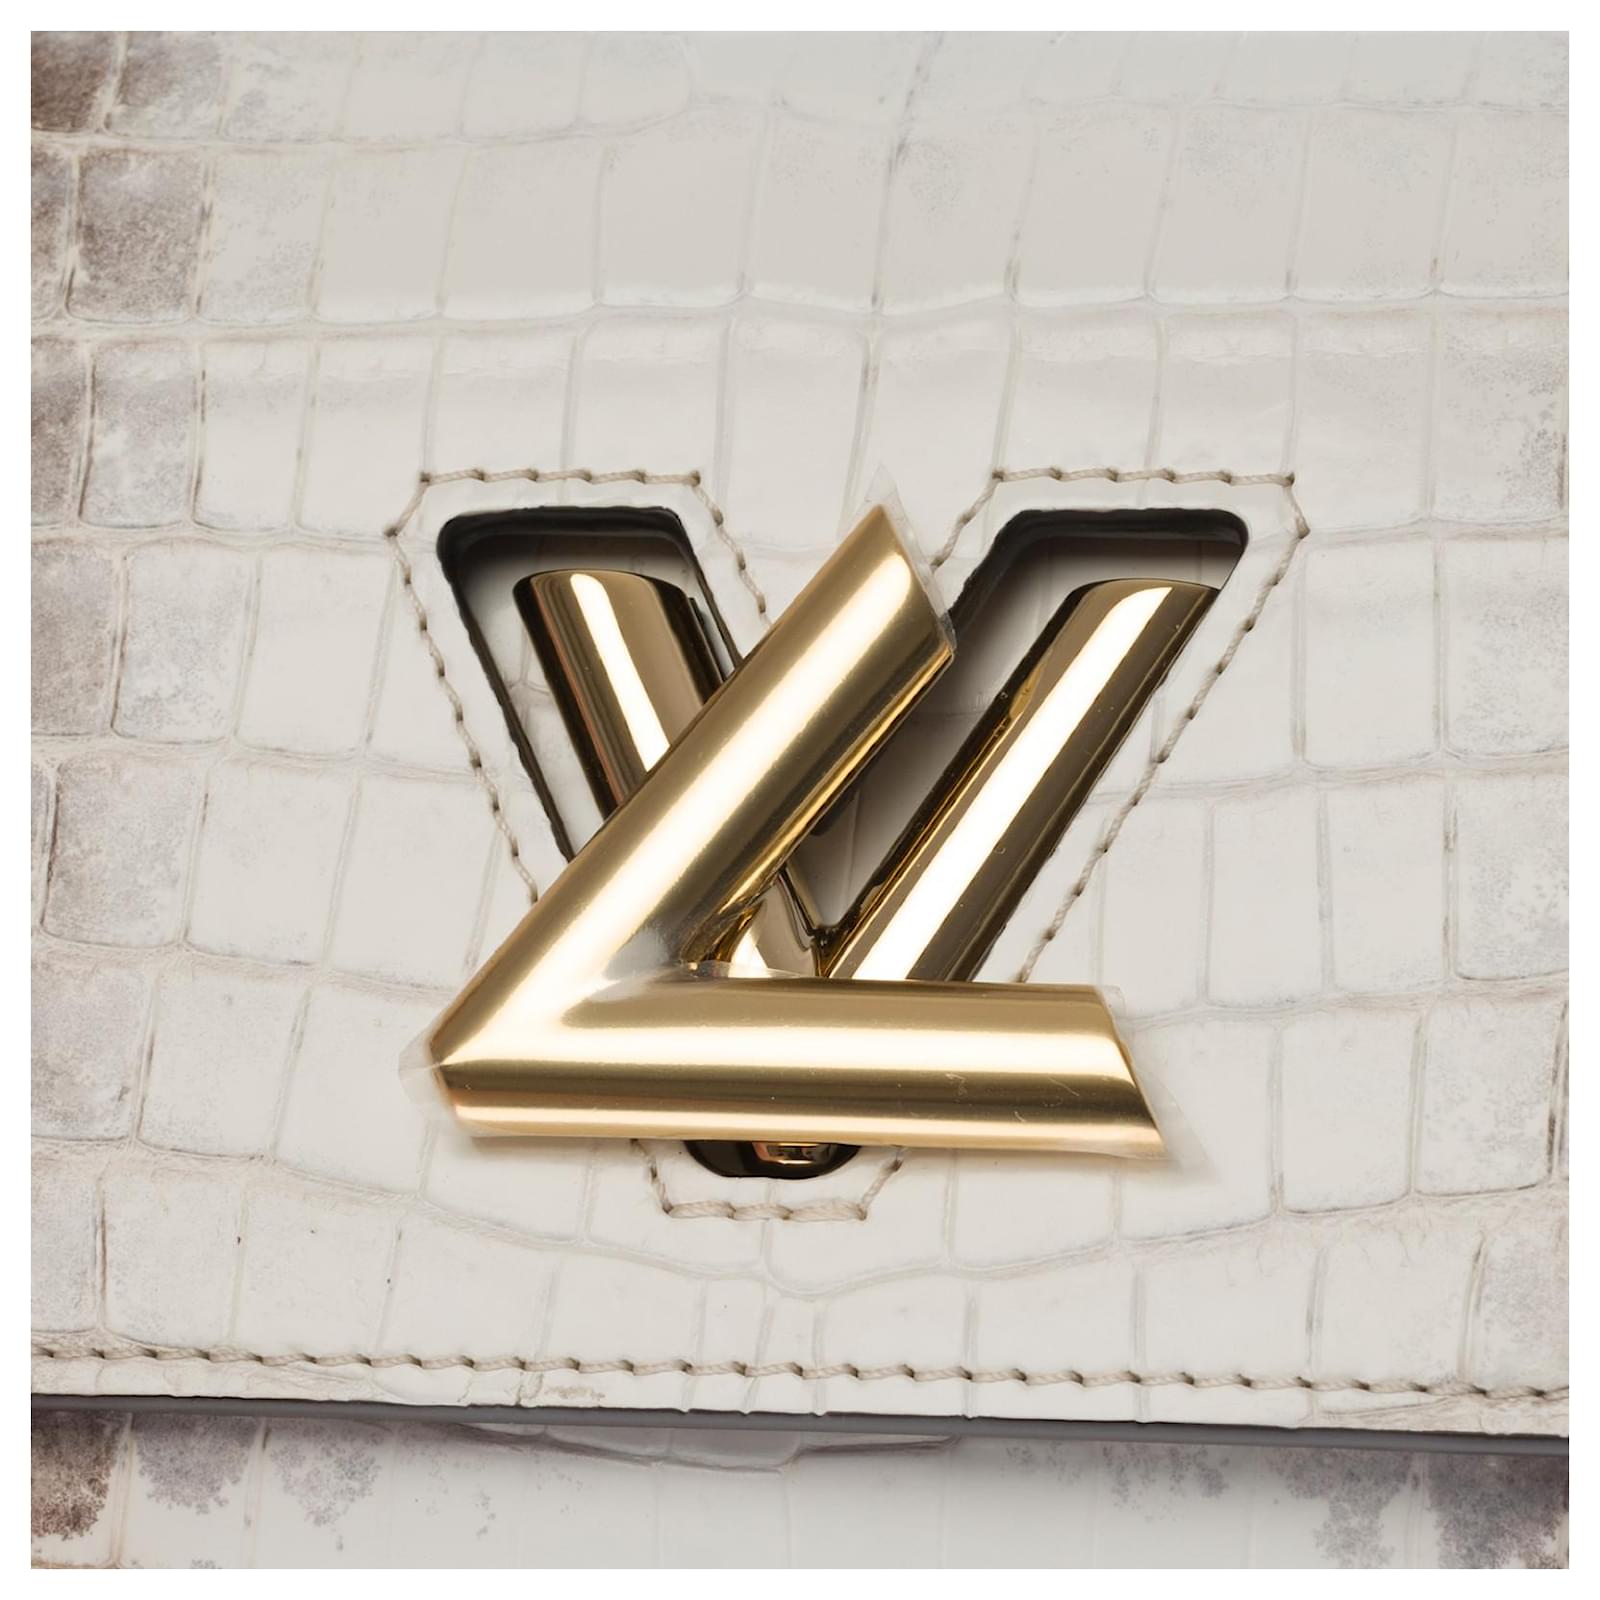 Exceptional and precious Louis Vuitton Twist Mini bag in white